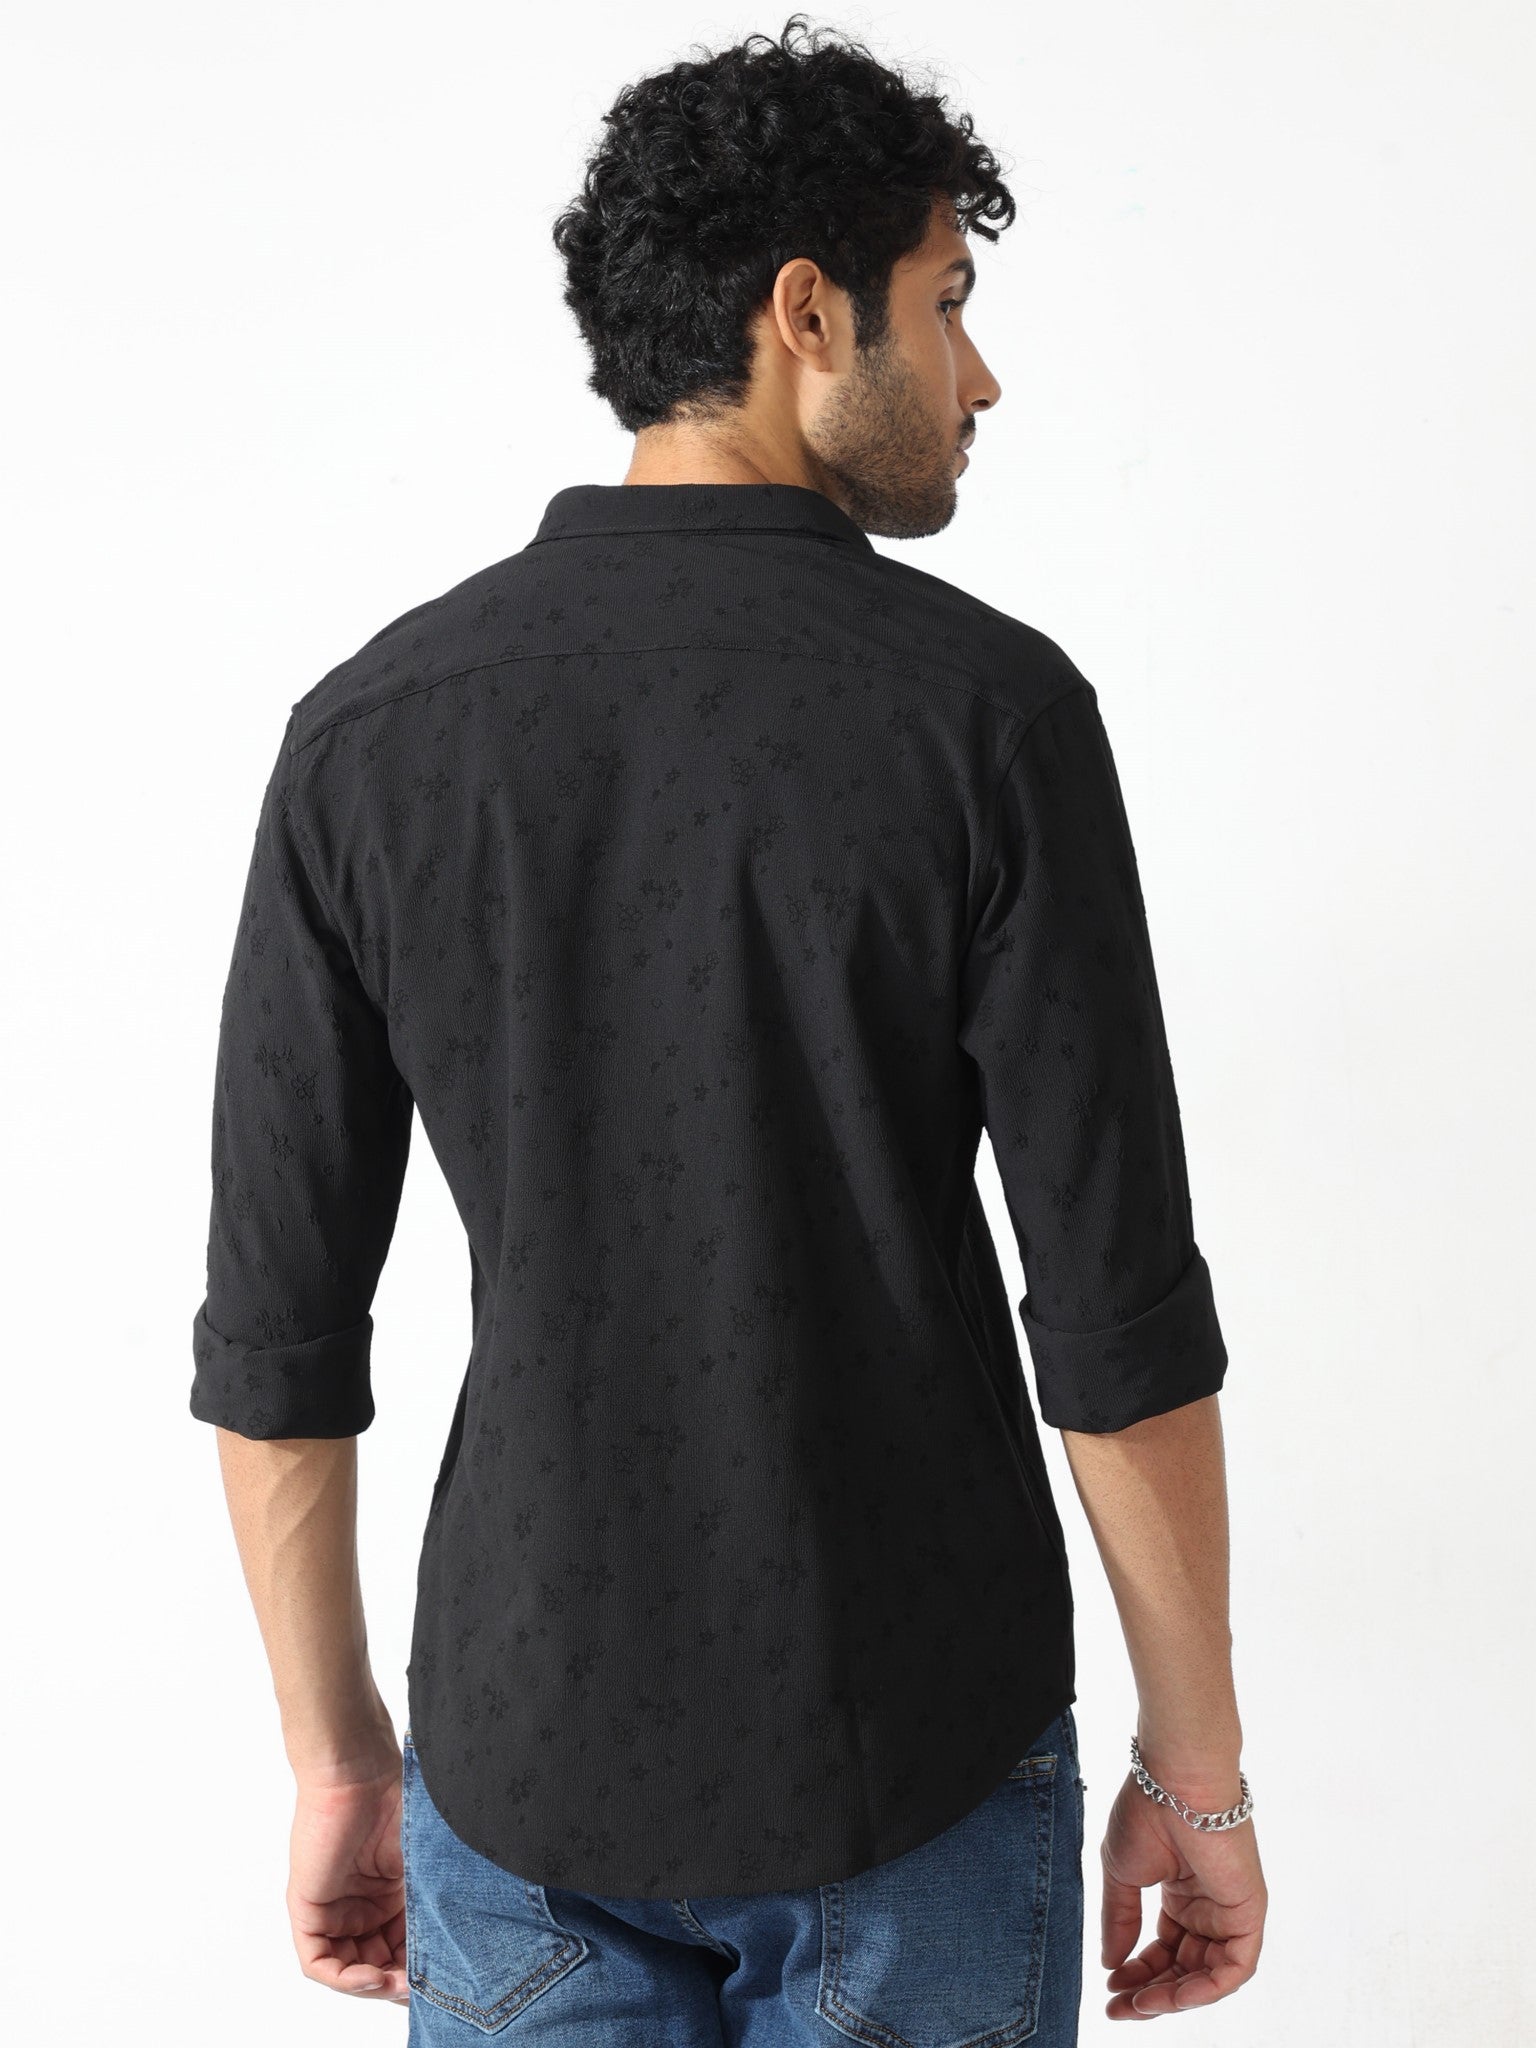 Flowly Jacquard Black Shirt